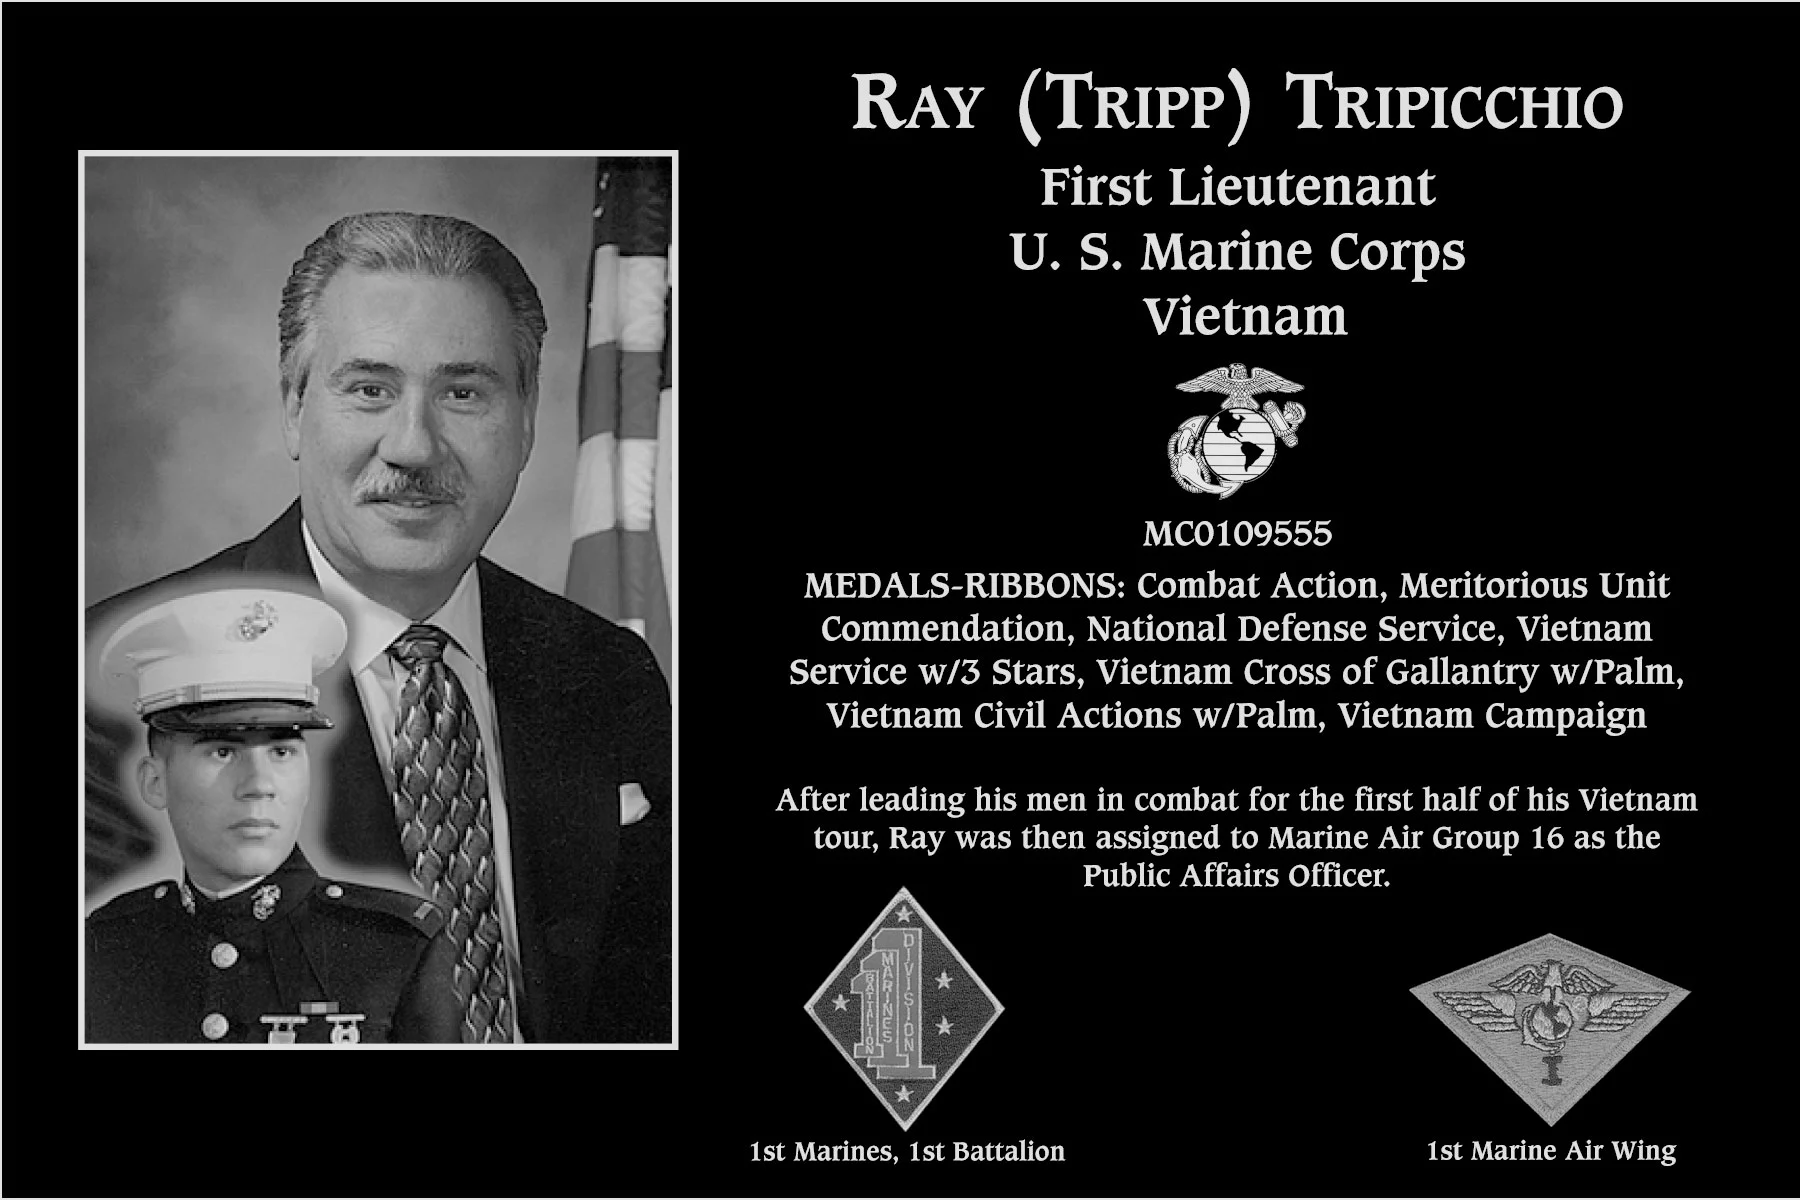 Ray “Tripp” Tripicchio, jr